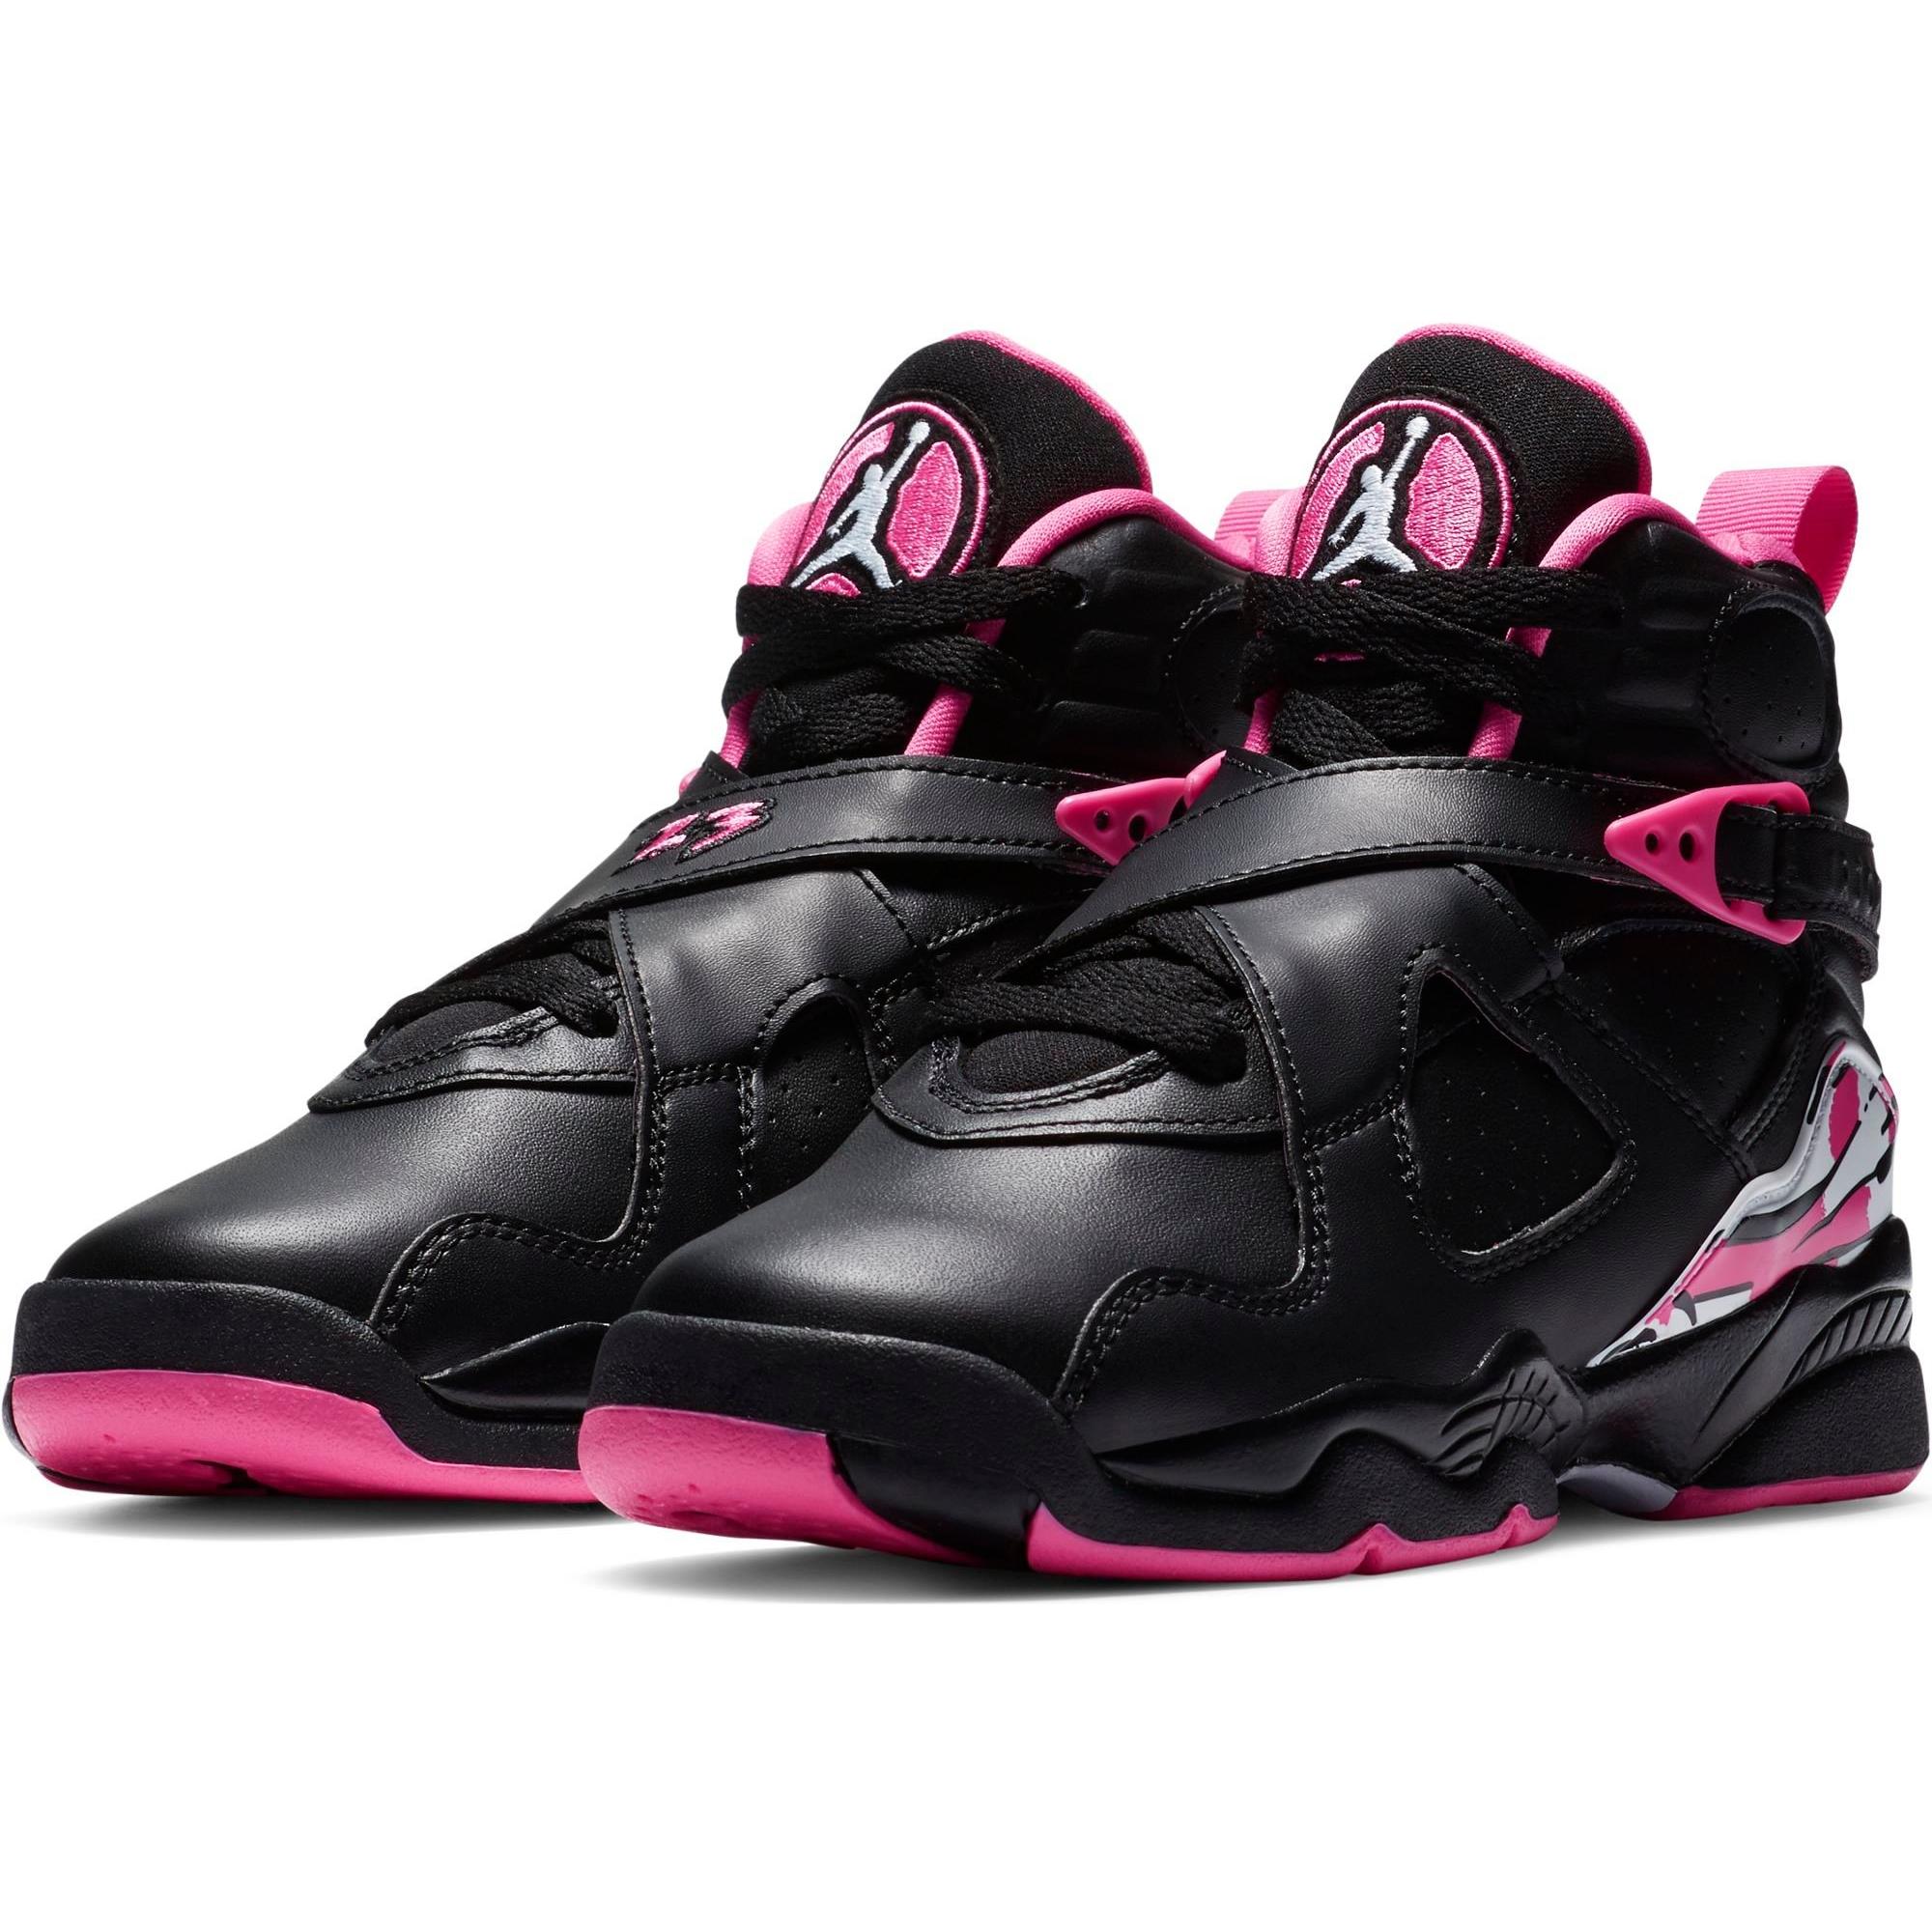 Sneakers Release Air Jordan 8 Retro “Pinksicle” Black/Pink Girls’ Shoe